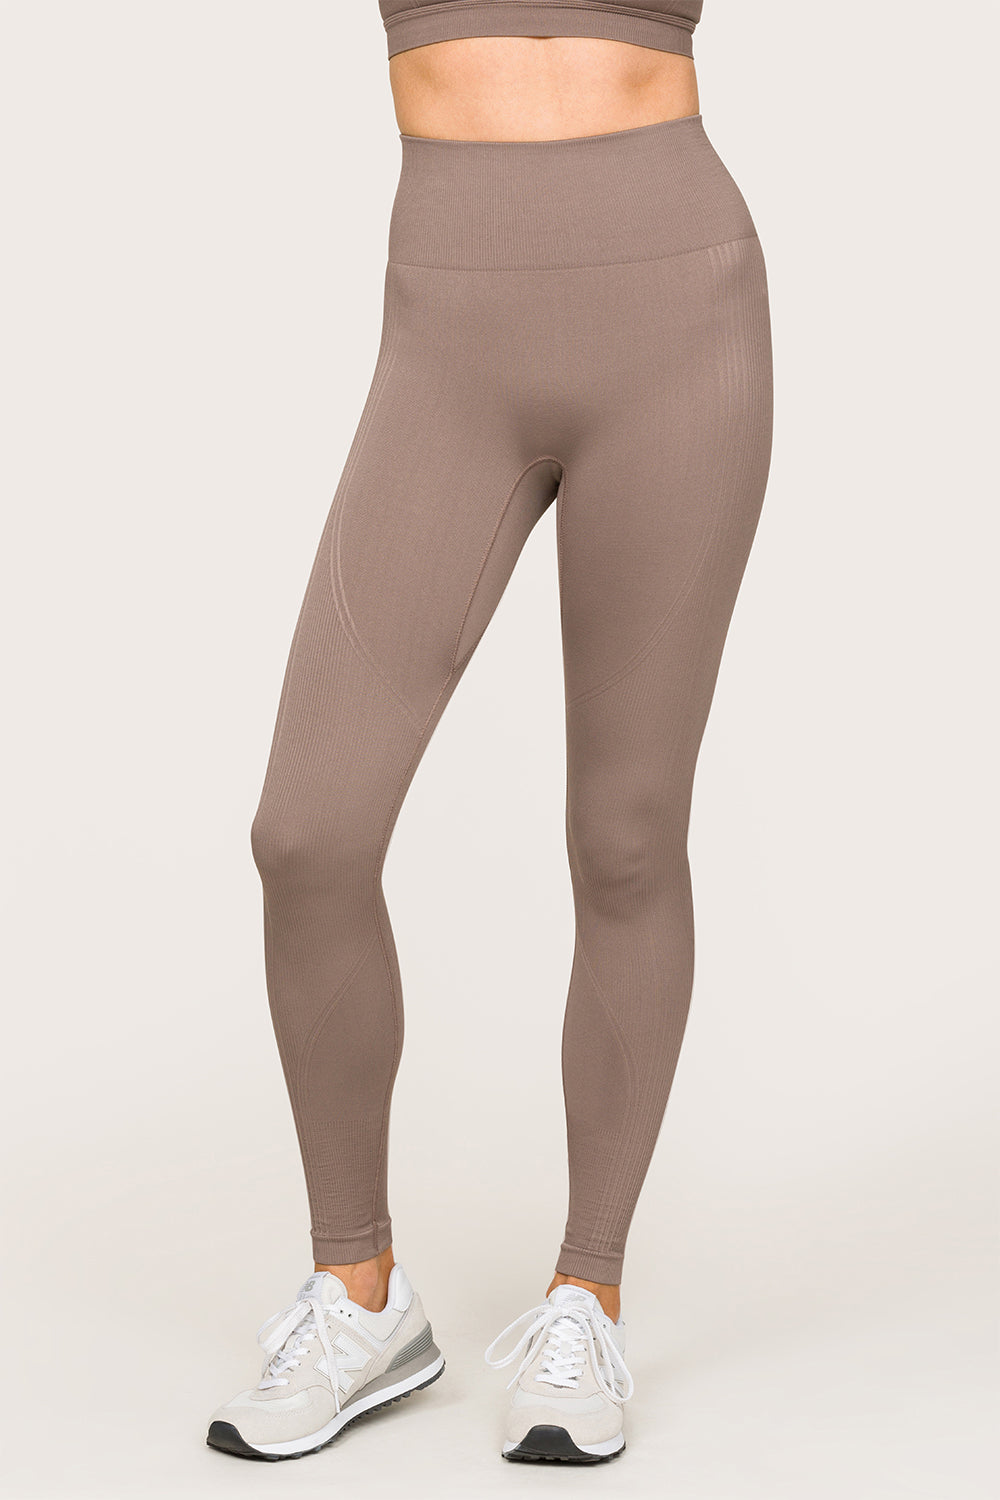 Alala women's seamless leggings in light brown